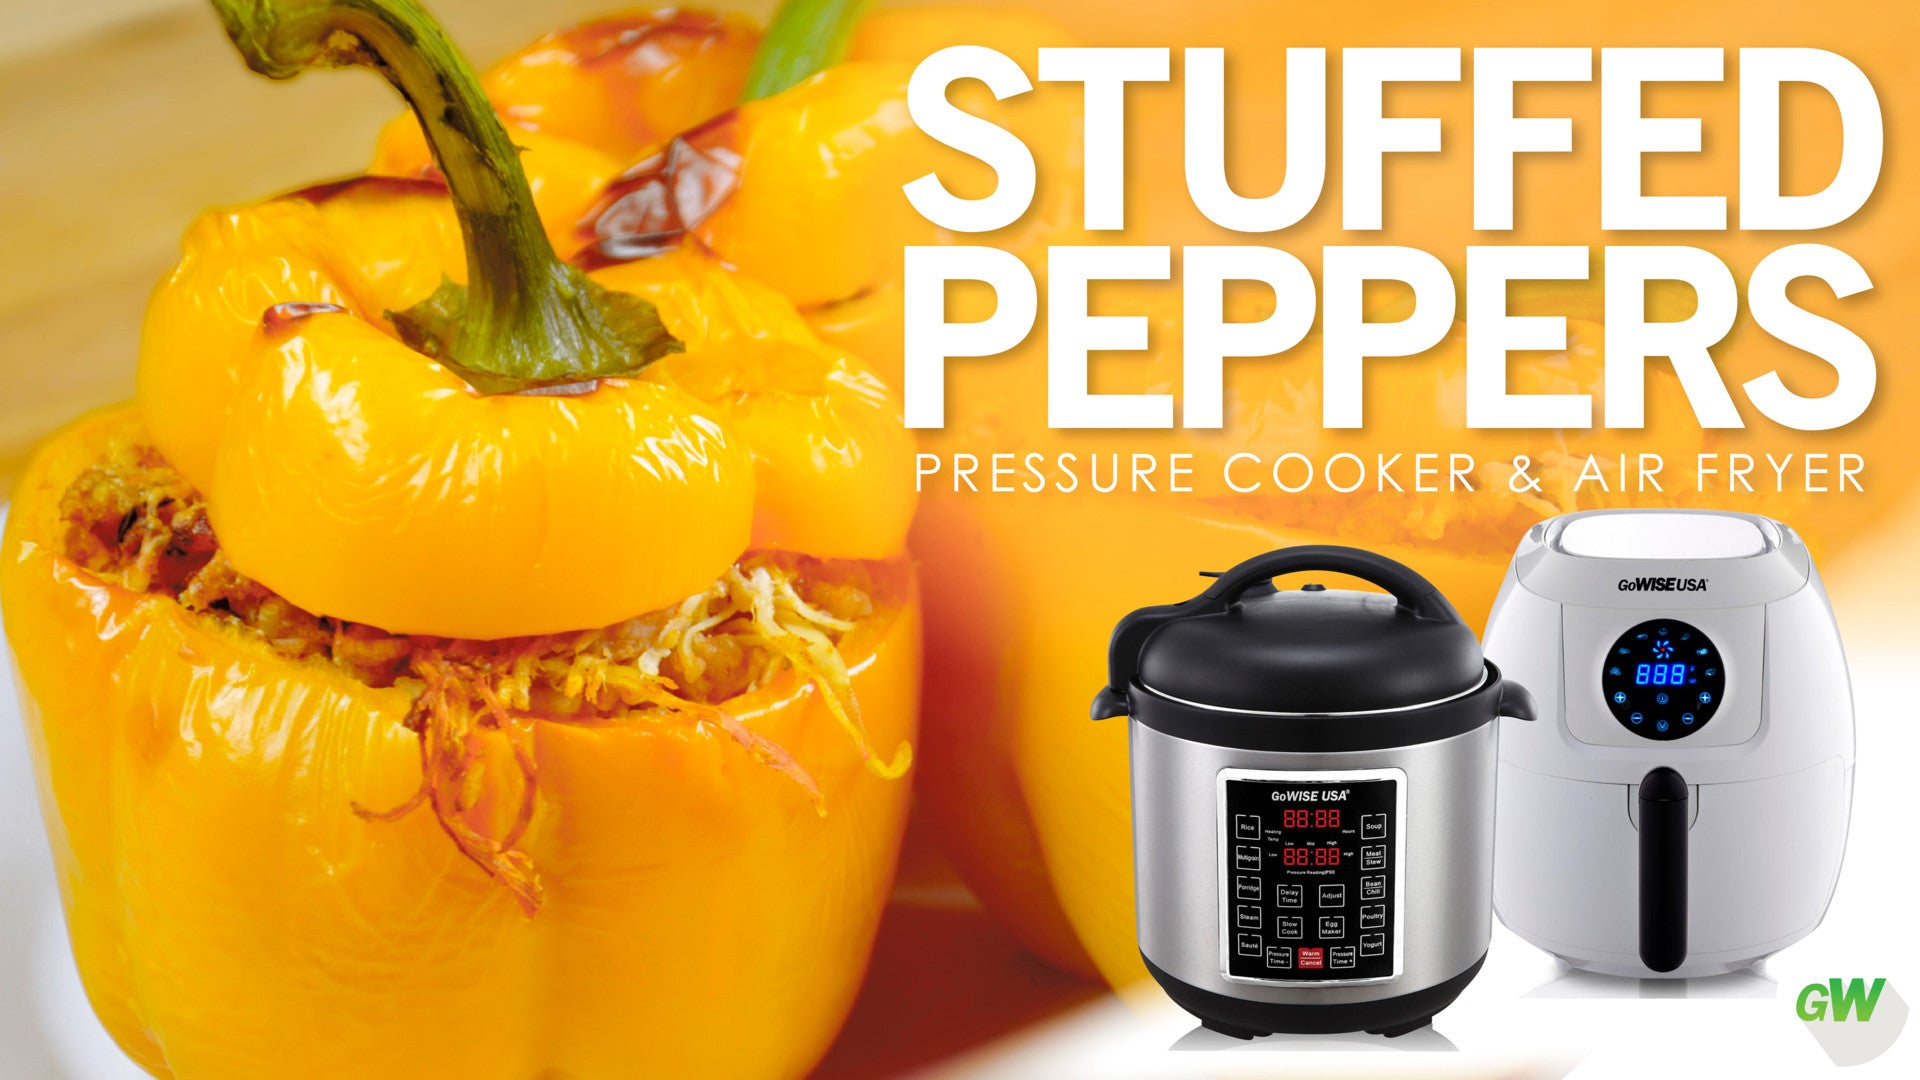 Stuffed Peppers - Pressure Cooker & Air Fryer